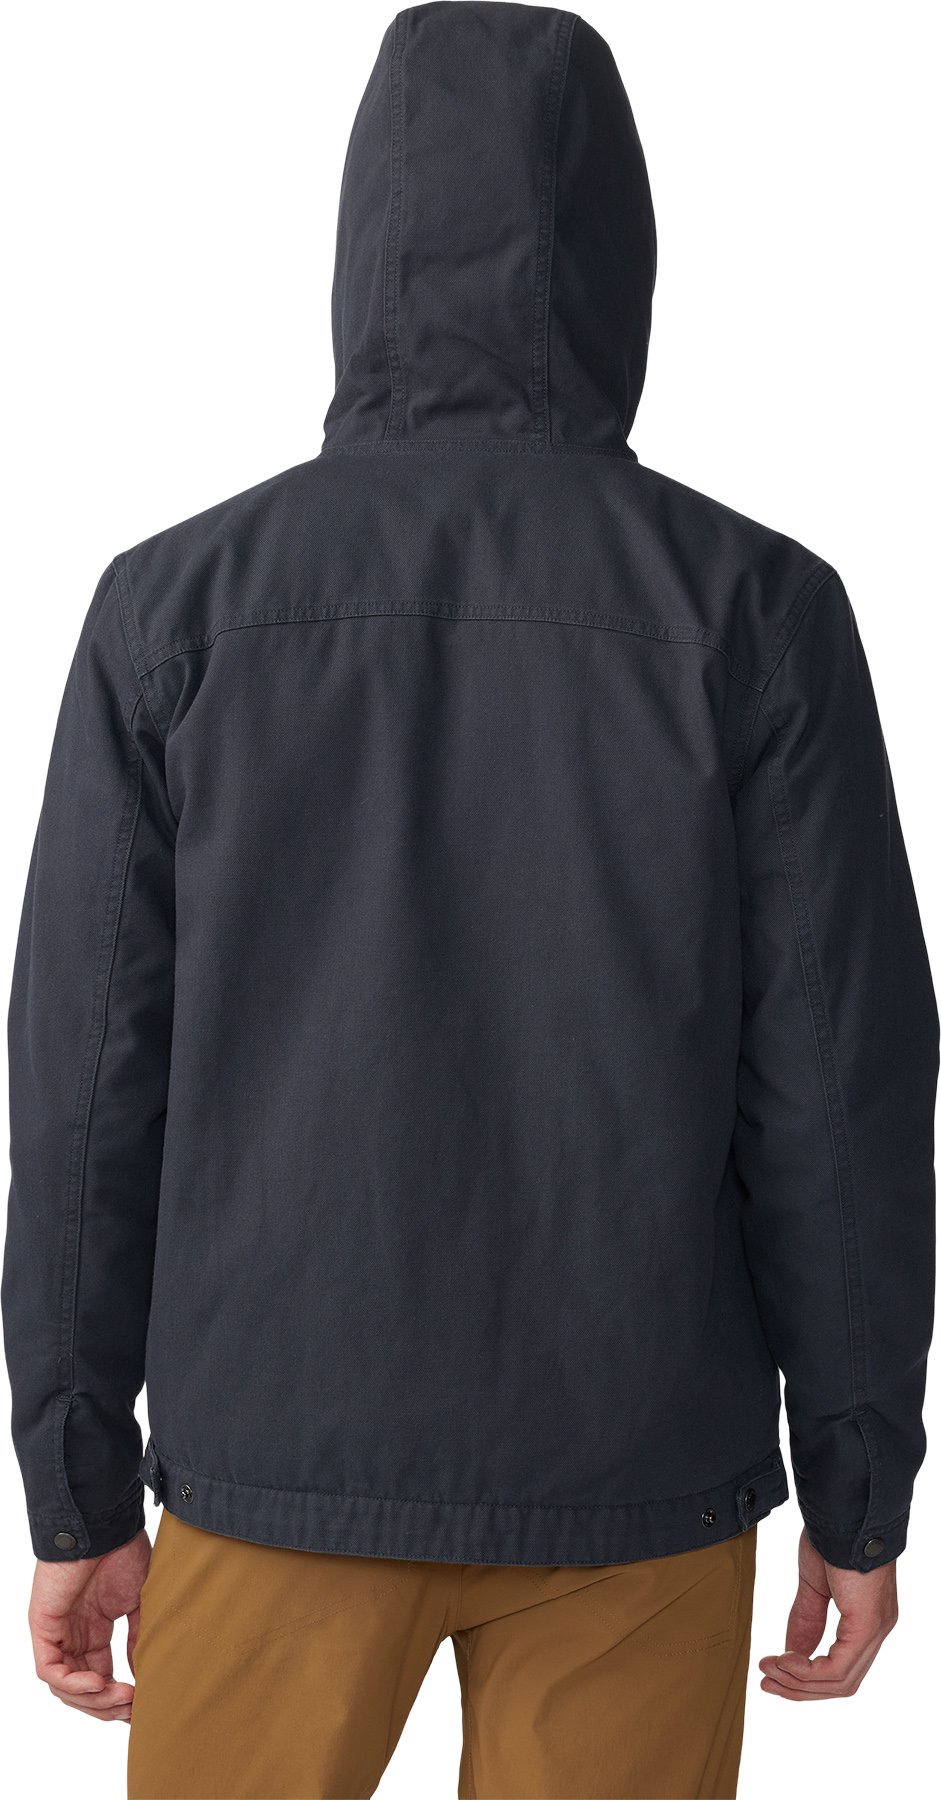 Product gallery image number 7 for product Teton Ridge Jacket - Men's